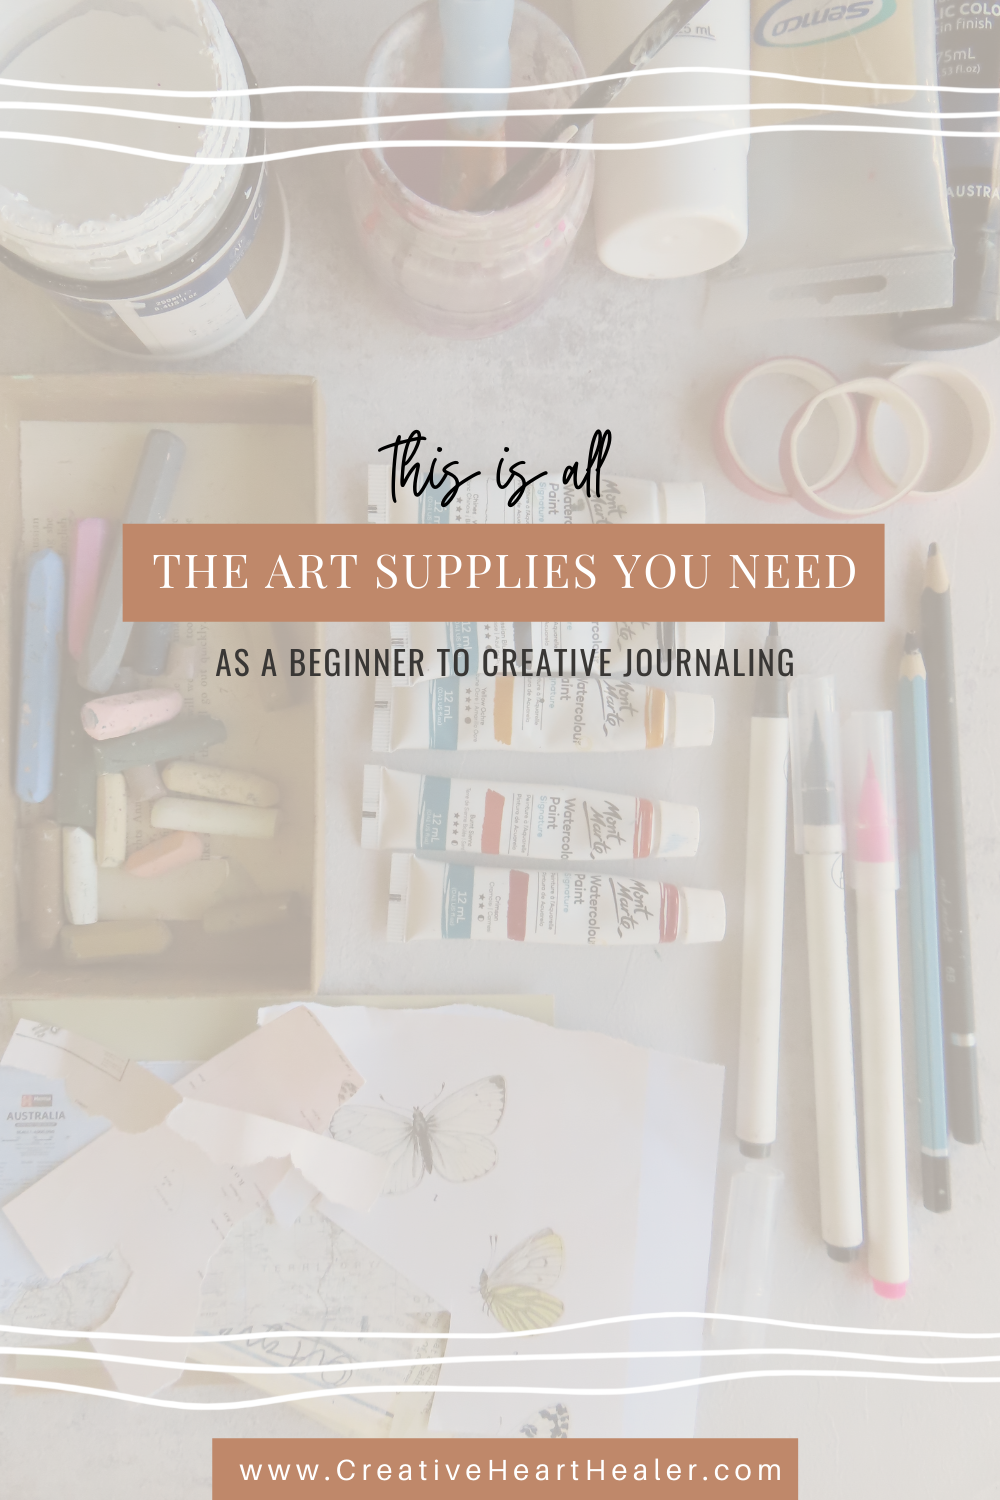 8 Essential Art Journal Supplies Every Beginner Should Start With